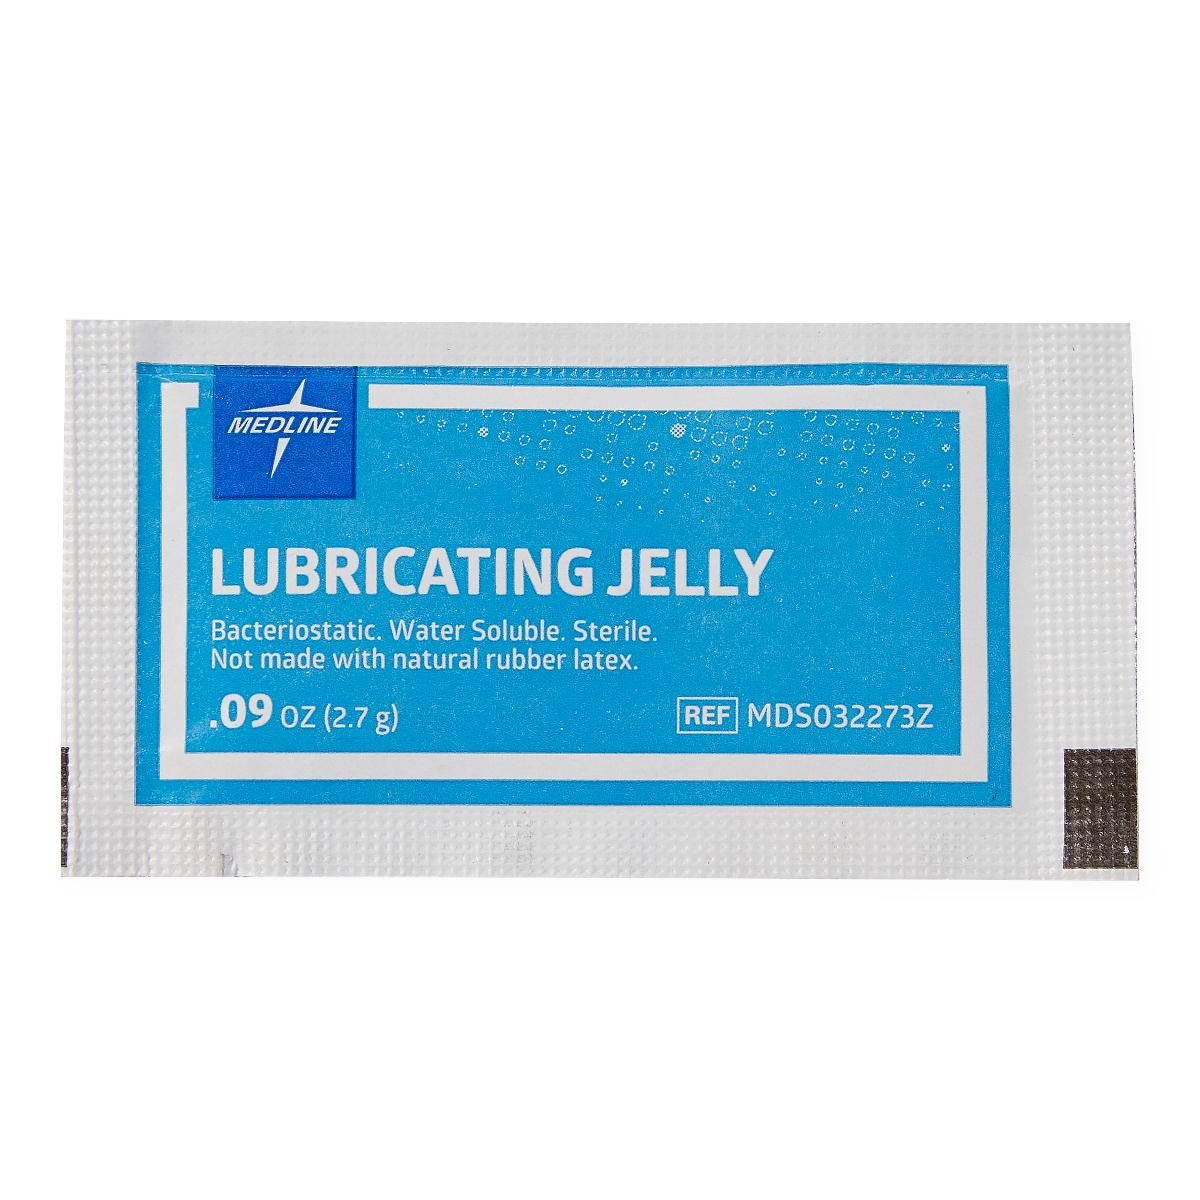 Medline Lubricating Jelly 2.7-g packet 144/bx